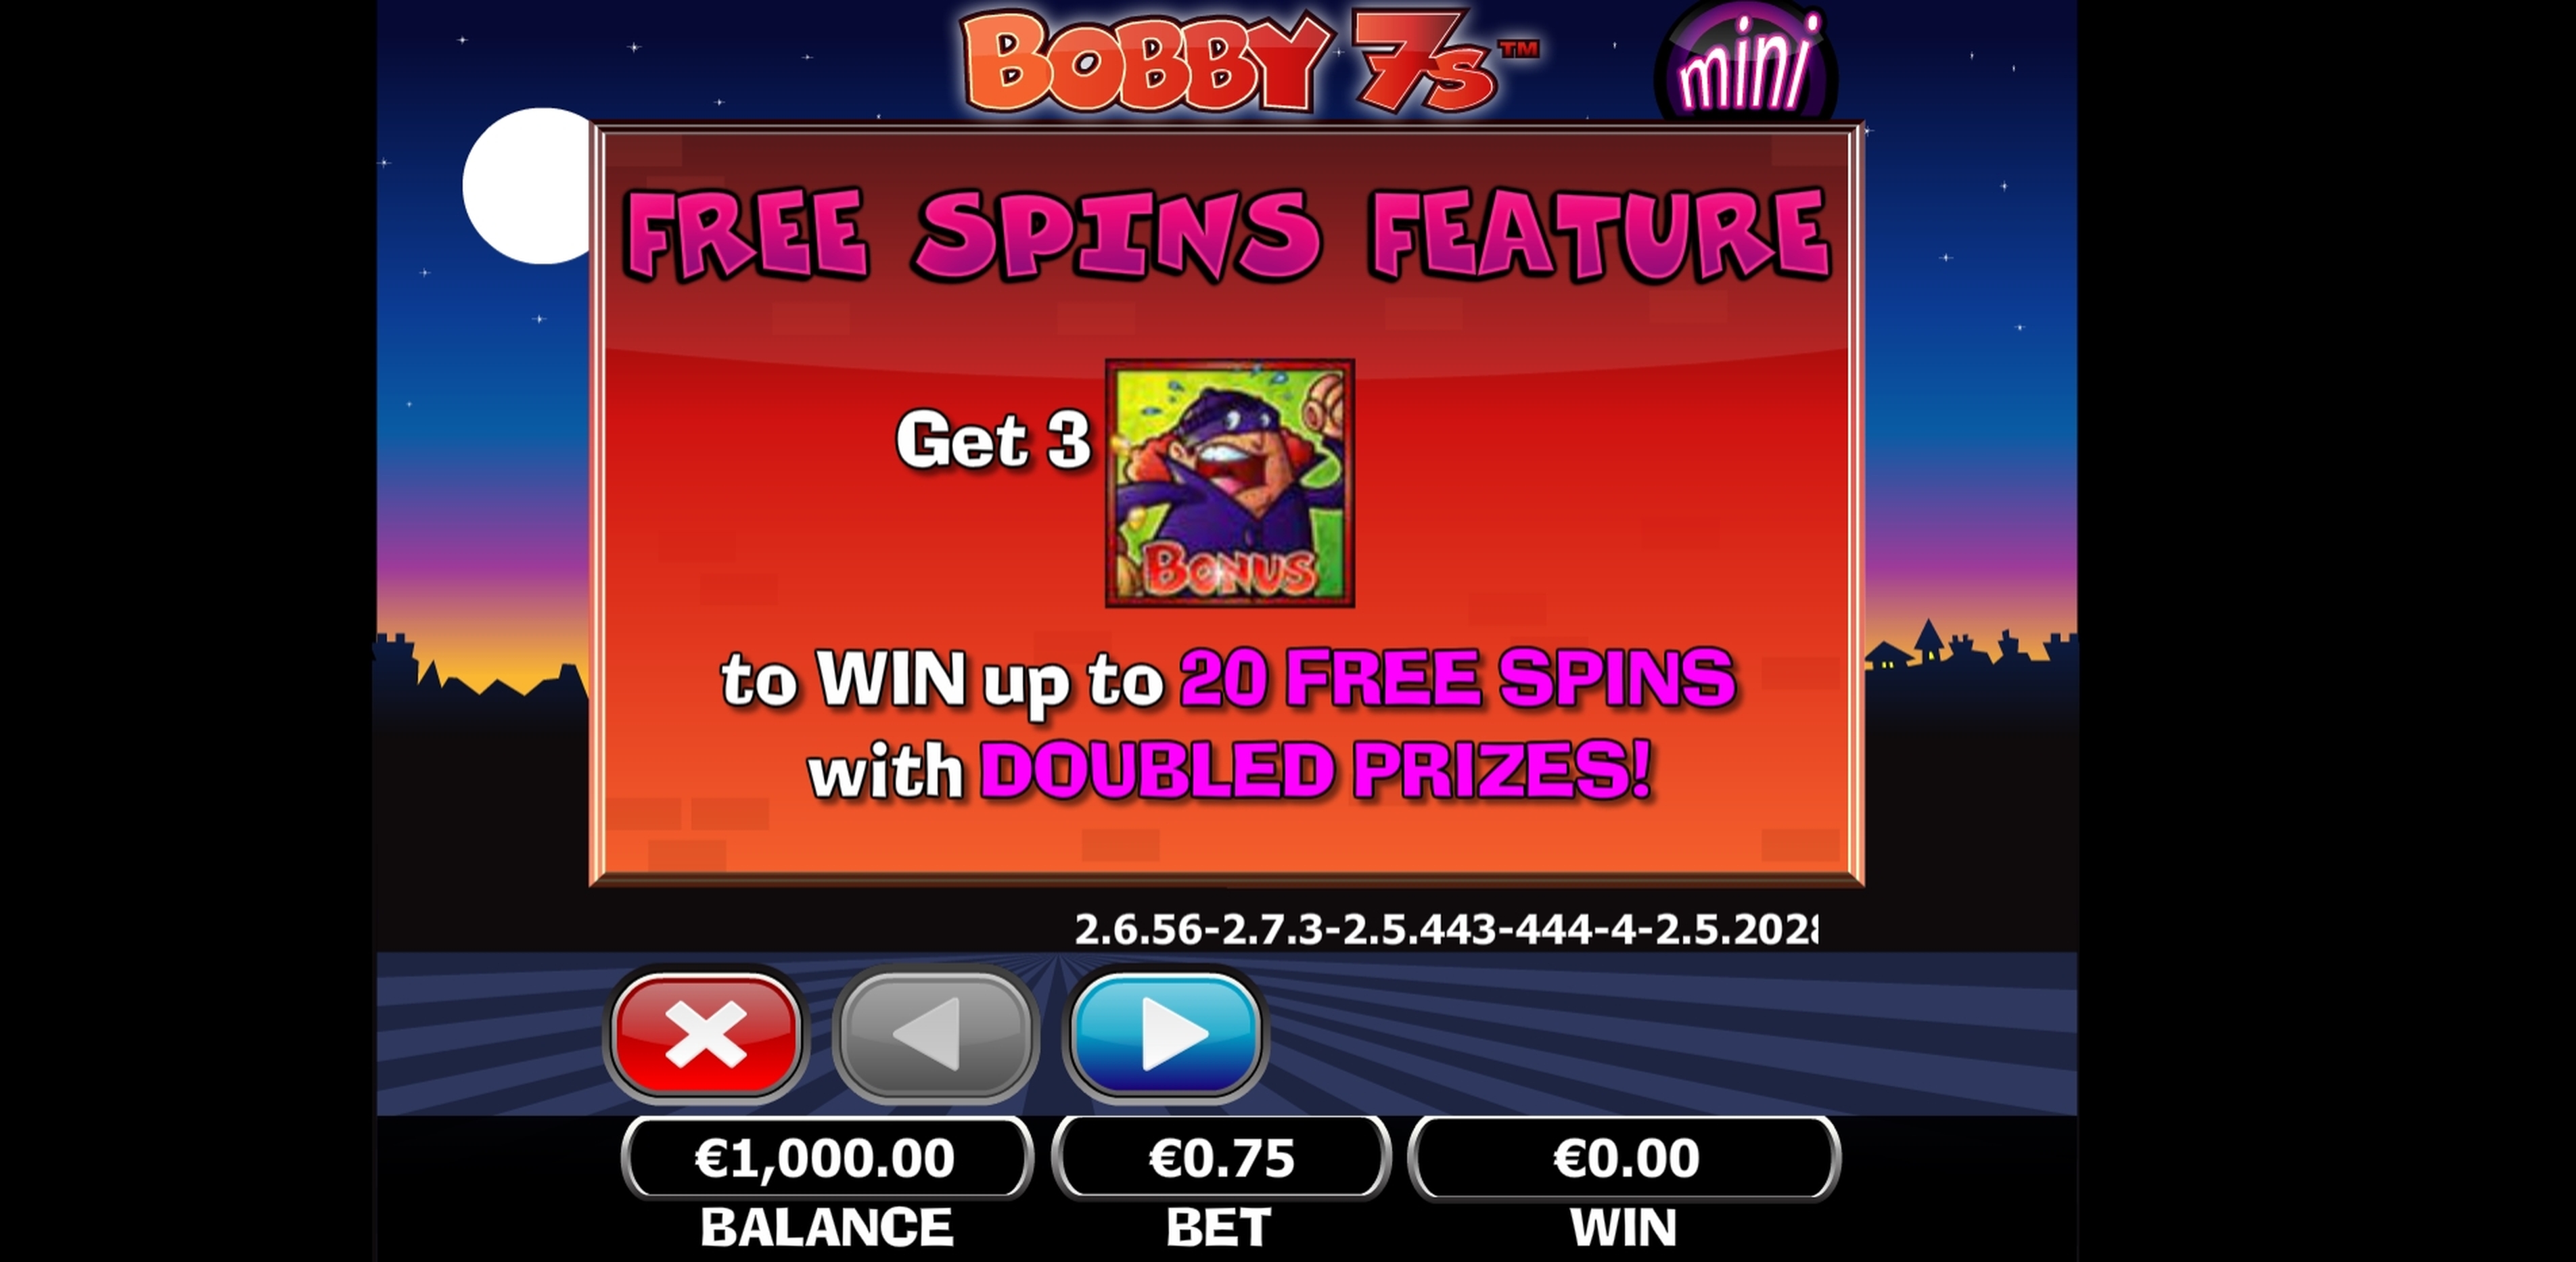 Info of Bobby 7s Mini Slot Game by NextGen Gaming